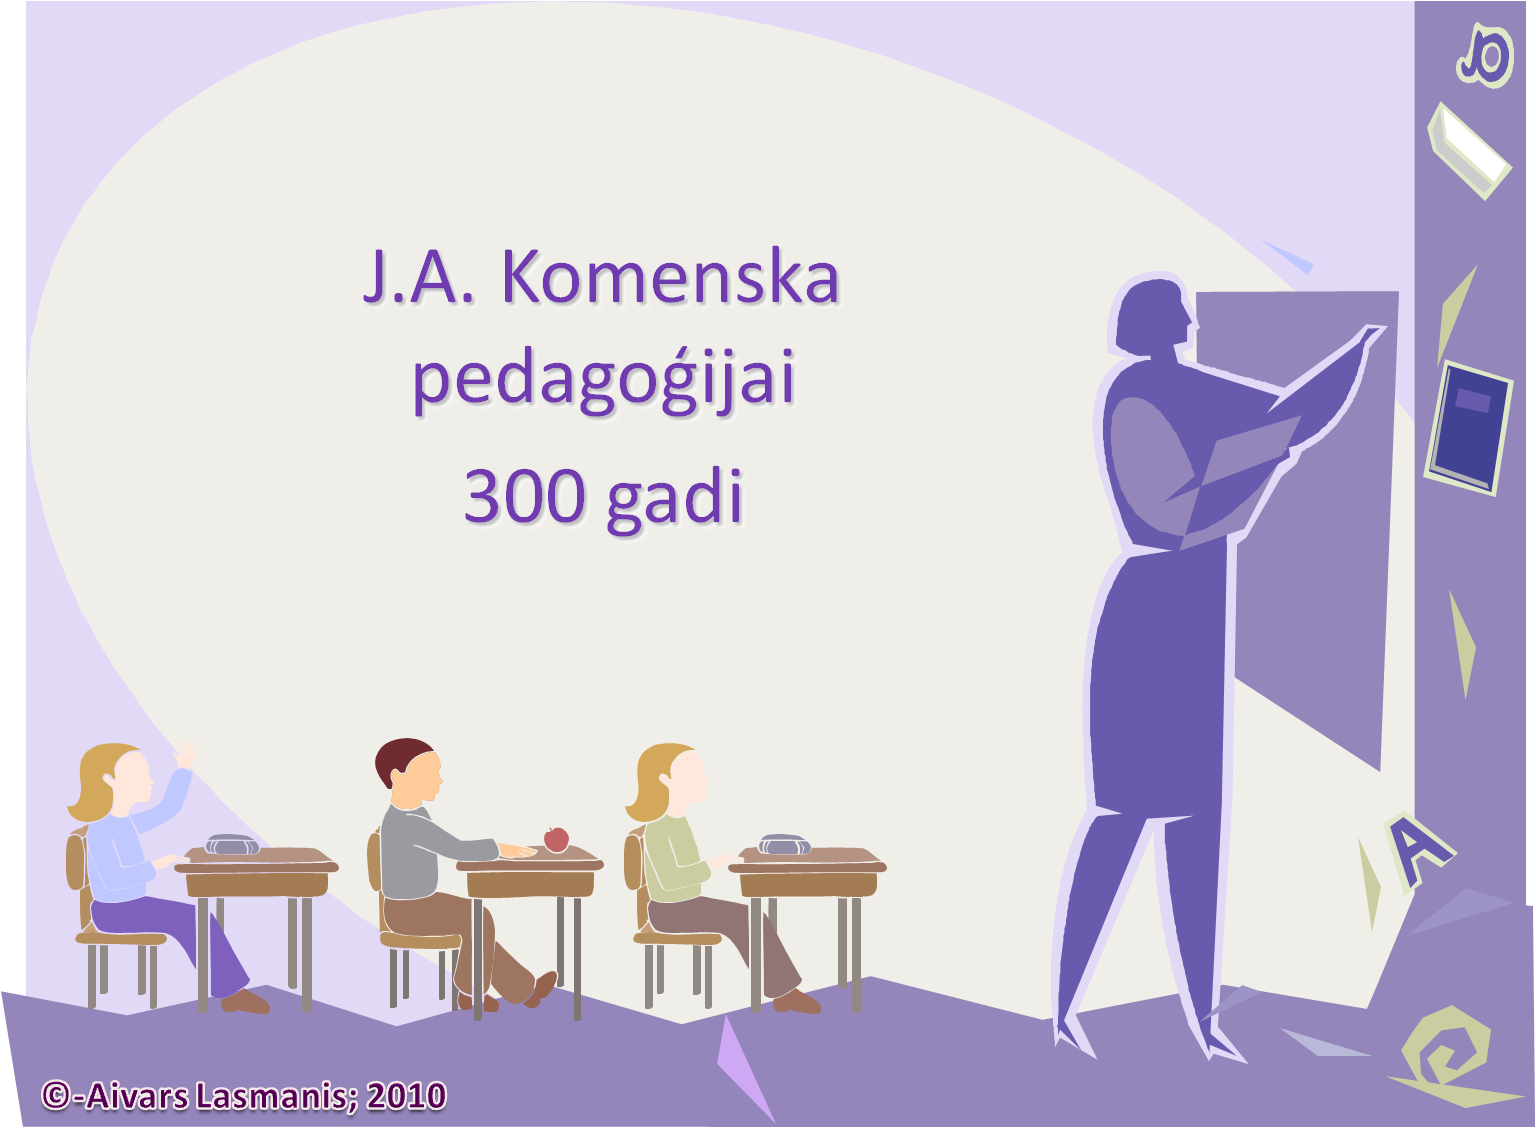 Failskomenska_pedagogijai_300gadi.png